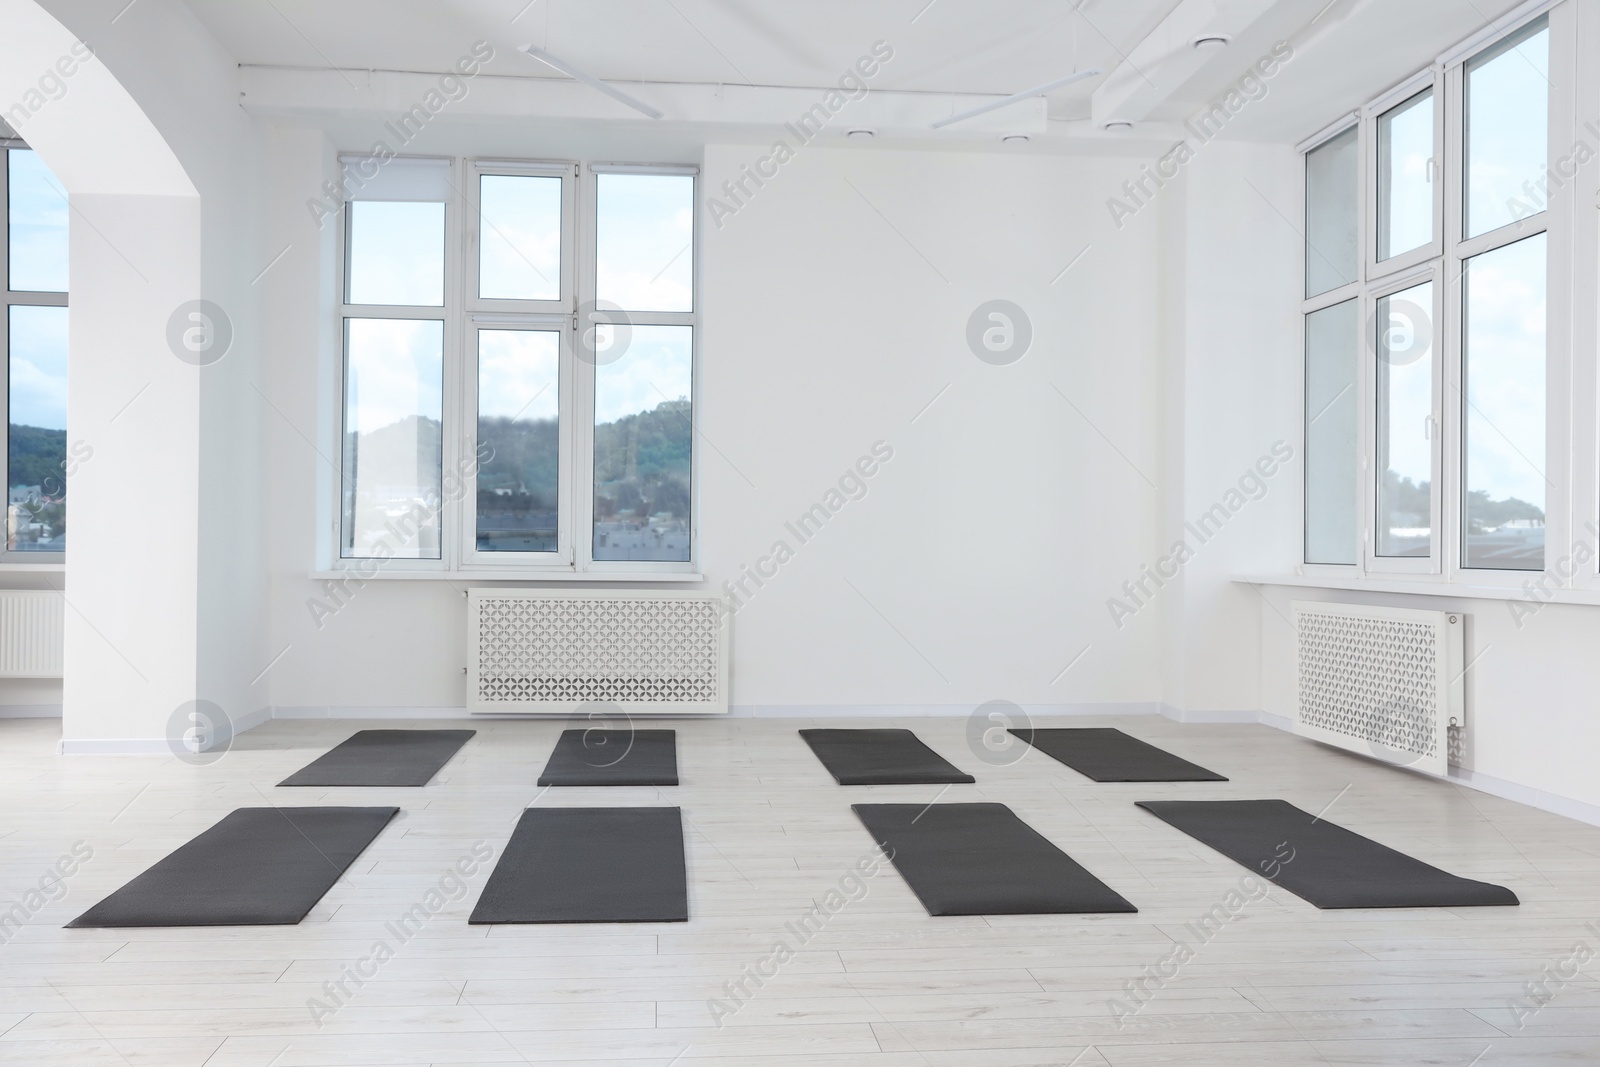 Photo of Spacious yoga studio with exercise mats and big windows